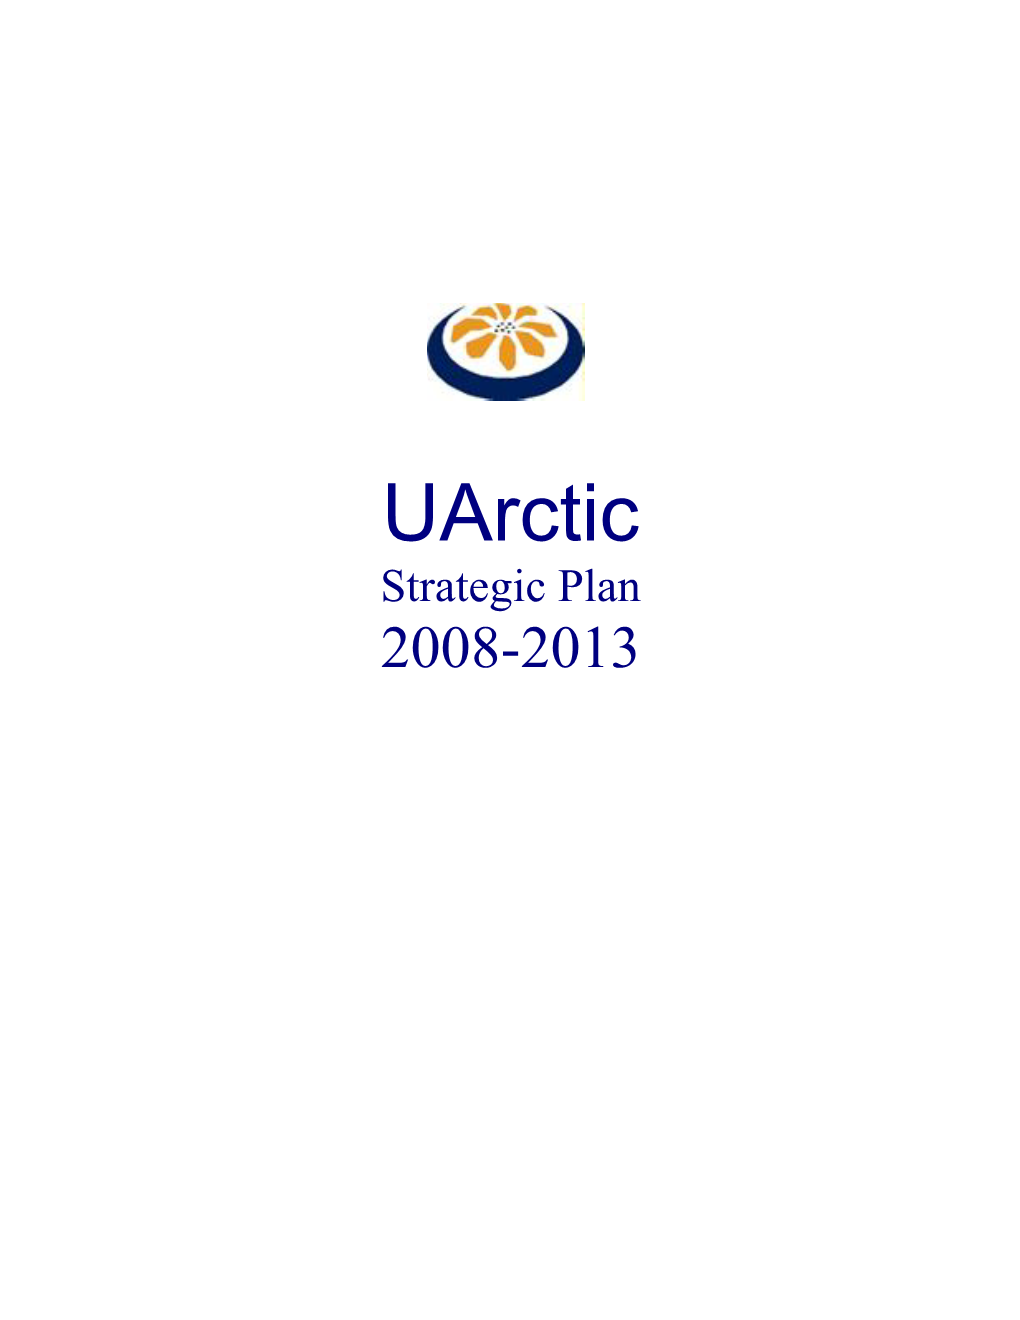 Uarctic Strategic Plan 2008-2013 University of the Arctic